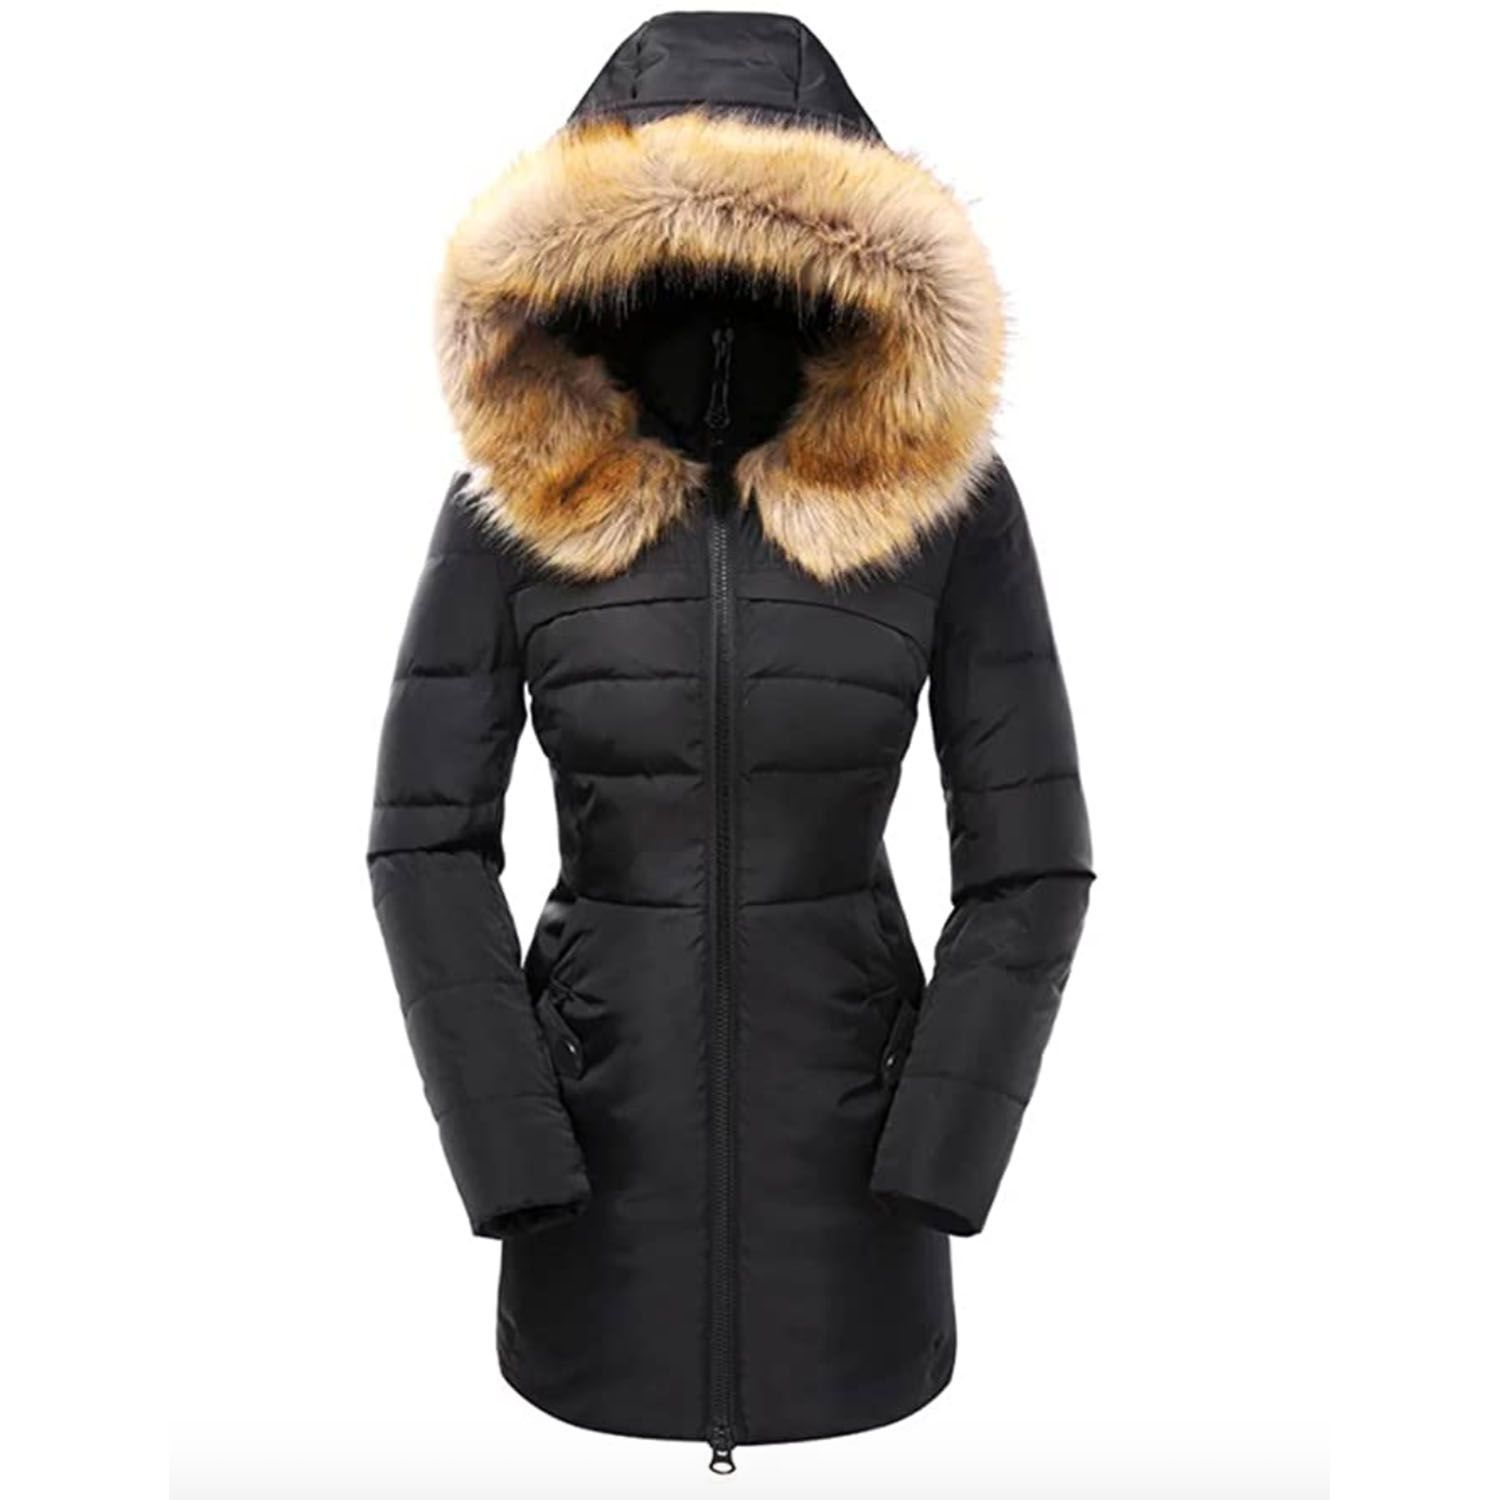 Cromoncent Womens Winter Warm Faux Fur Hooded Puffer Packable Outwear Parka Coat